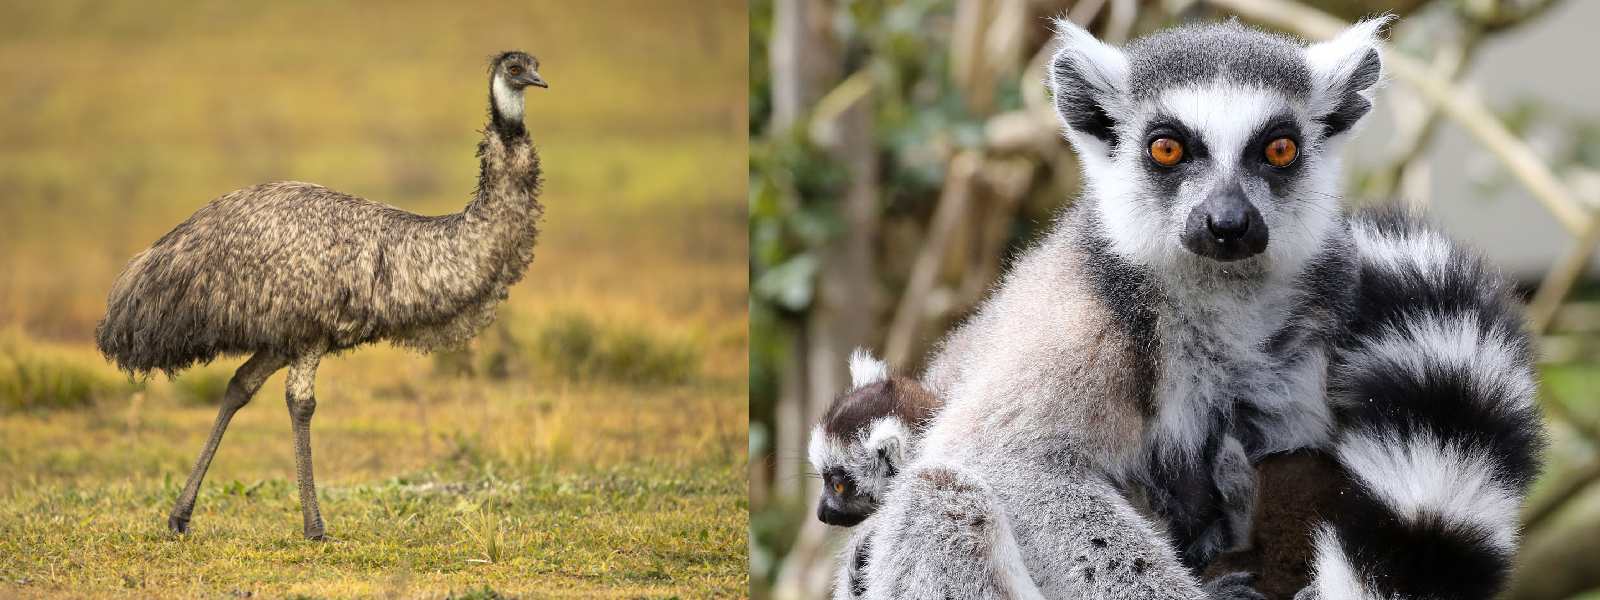 Sri Lanka gets Emu birds and Ring-Tailed Lemurs